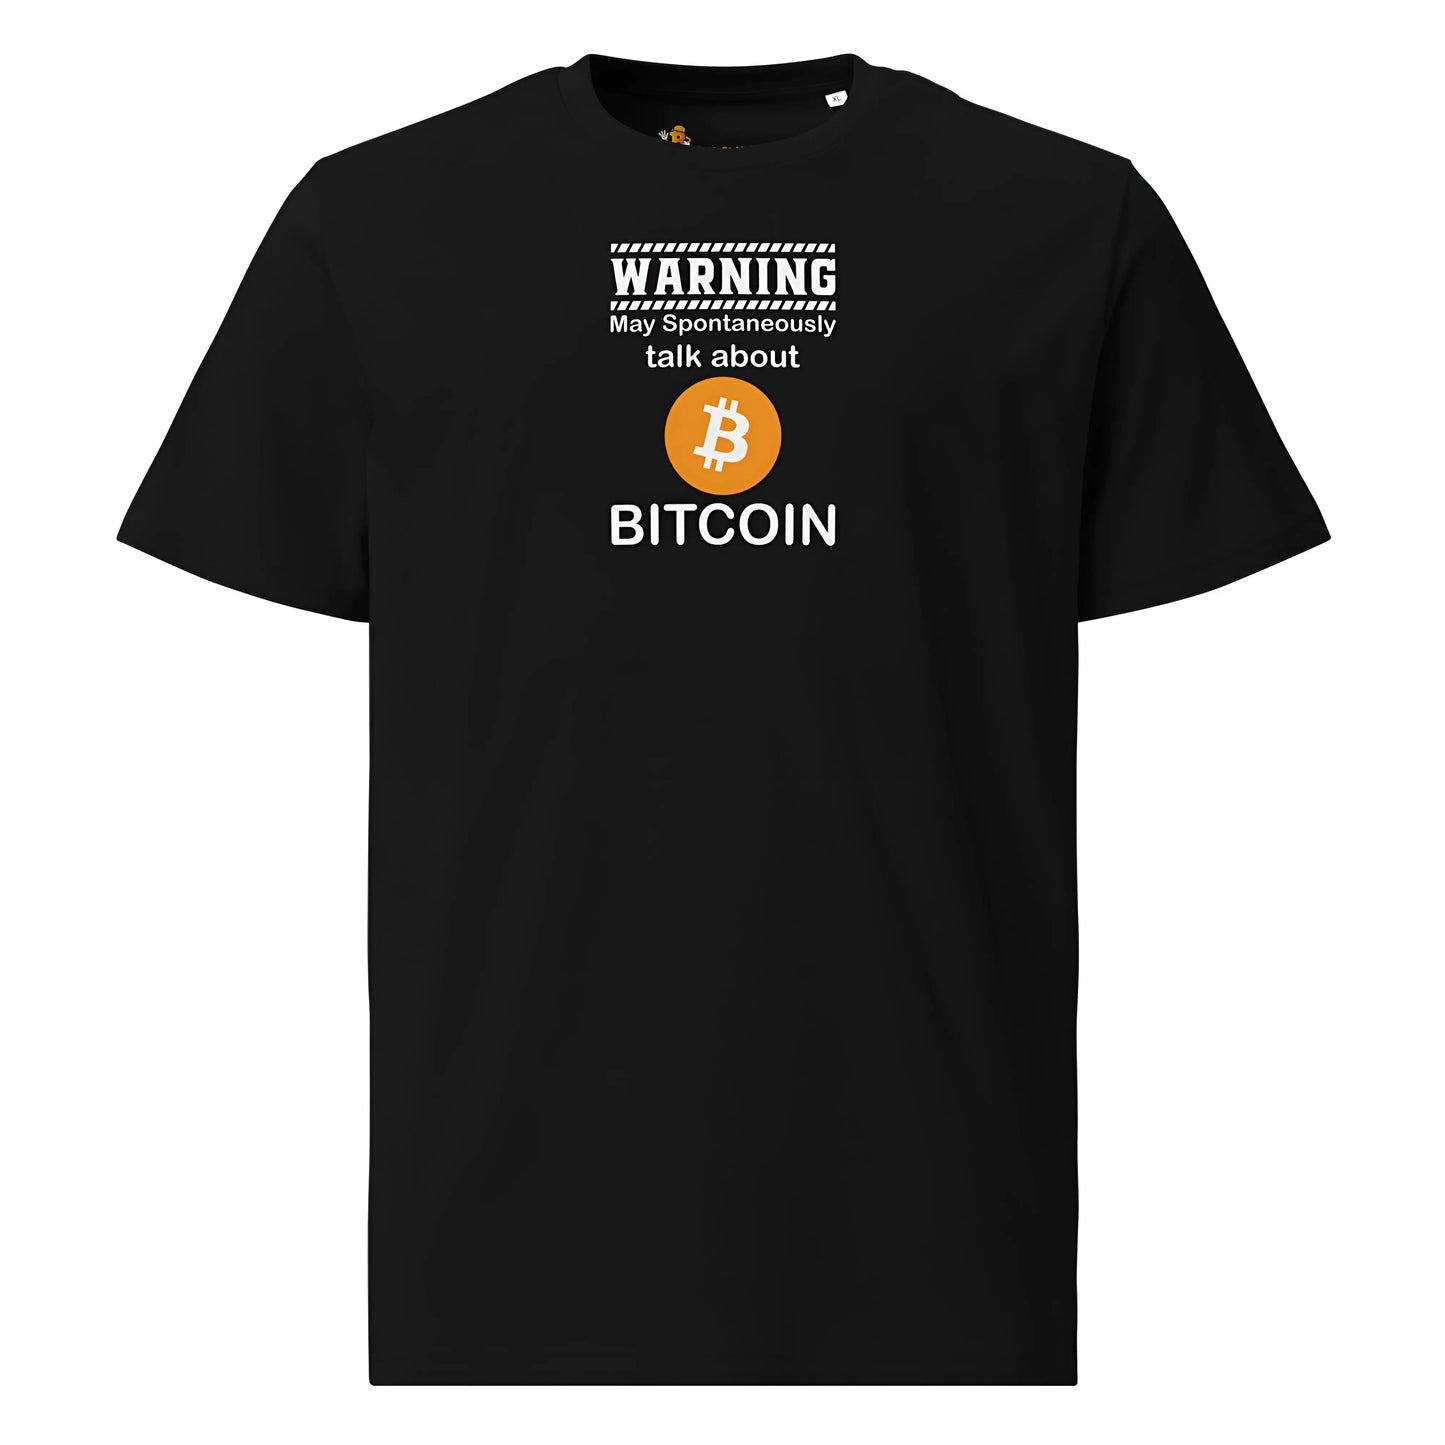 Talk About Bitcoin - Premium Unisex Organic Cotton Bitcoin T-shirt - Black Color